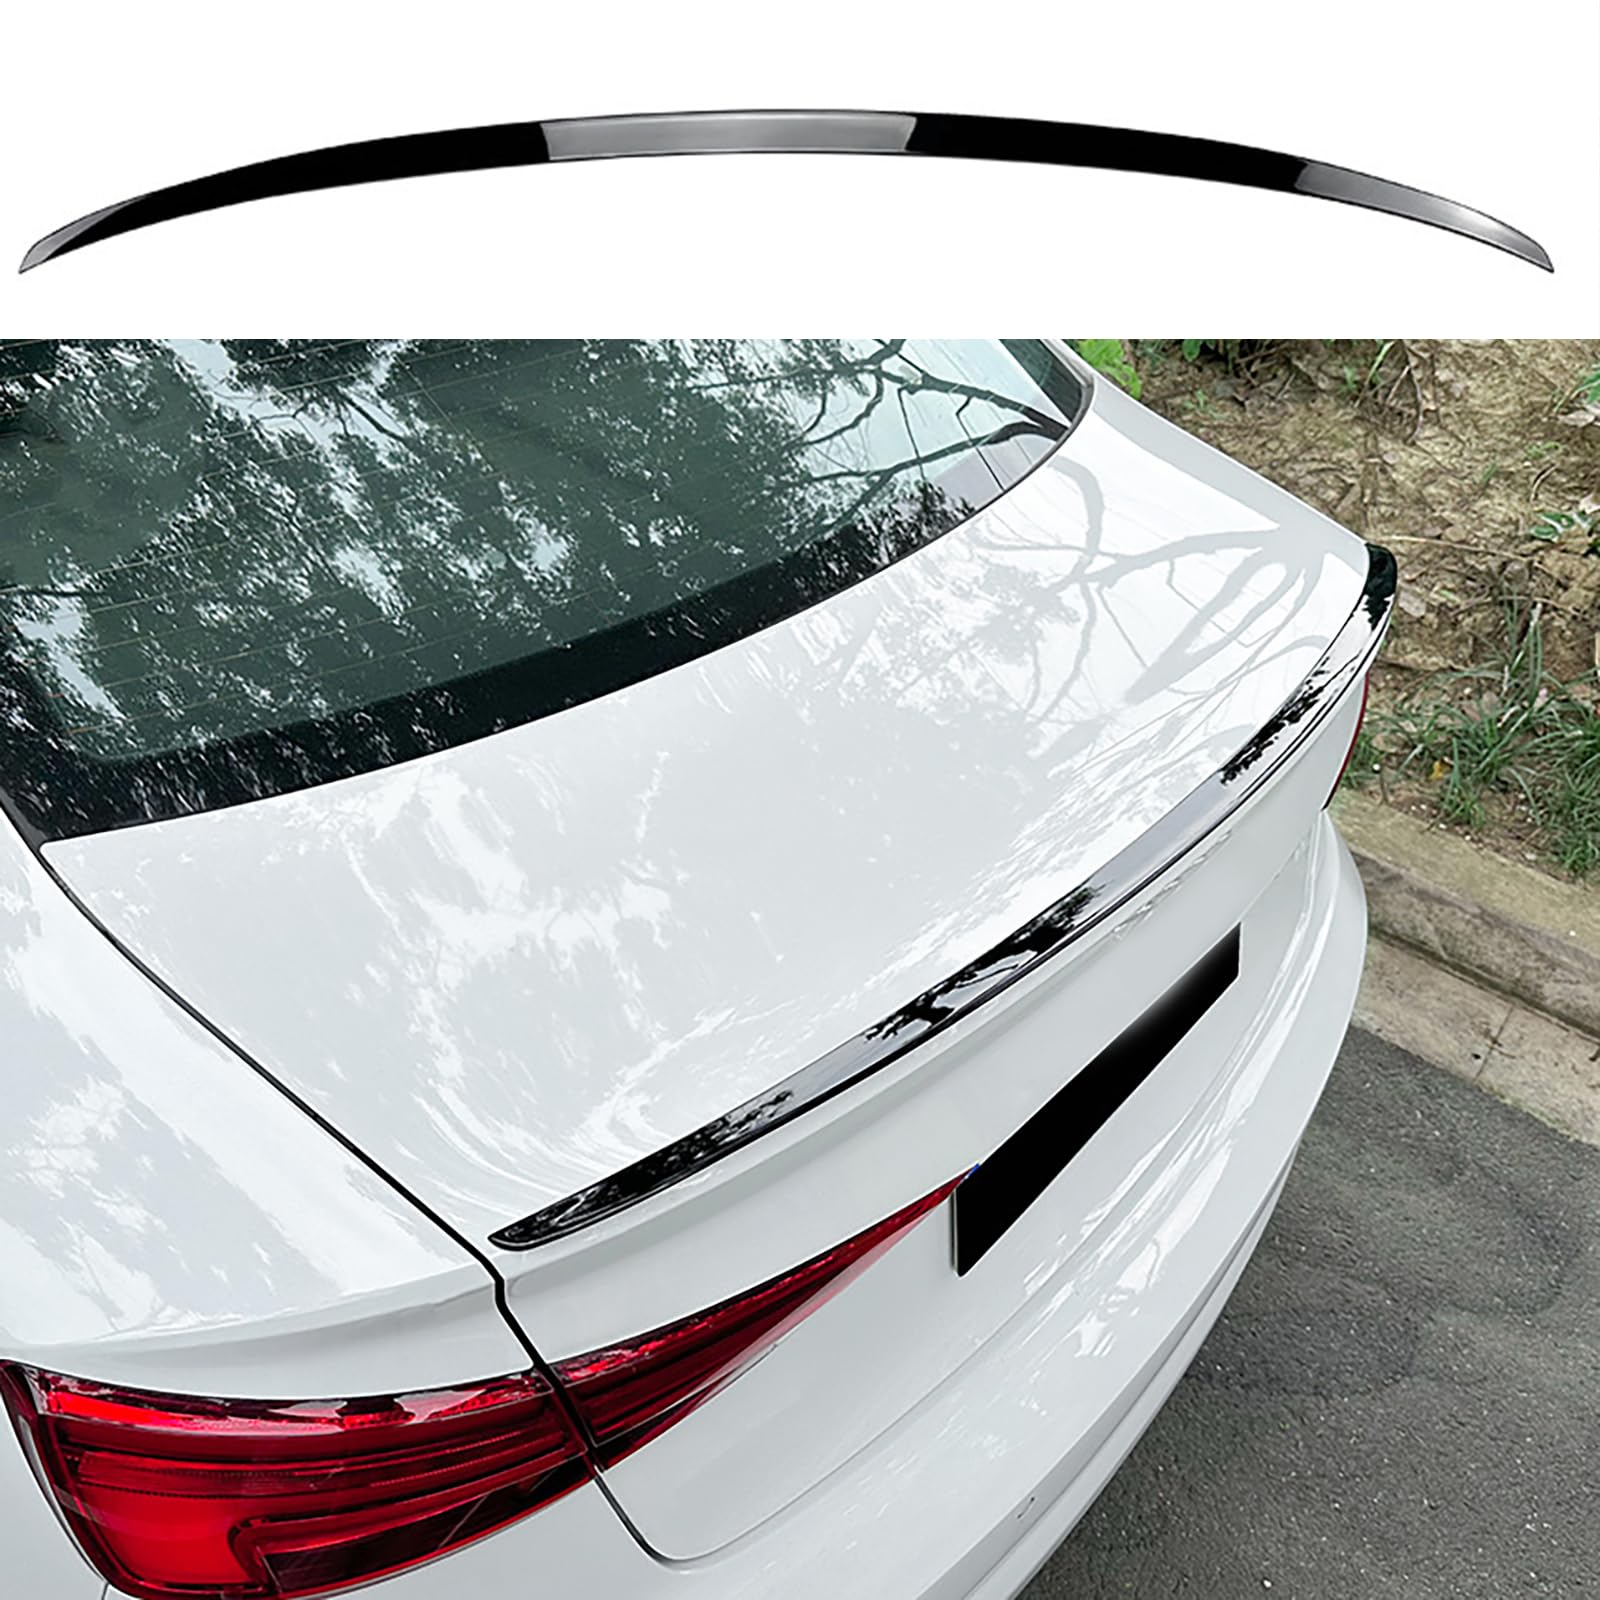 ABS Auto Heckspoiler für Audi A3 S3 8V Sedan 2014-2020, Hinten Spoiler Spoilerlippe Performance Tuning Lippe Wing Styling Modification Zubehör,Gloss Black von ZSWZDQ